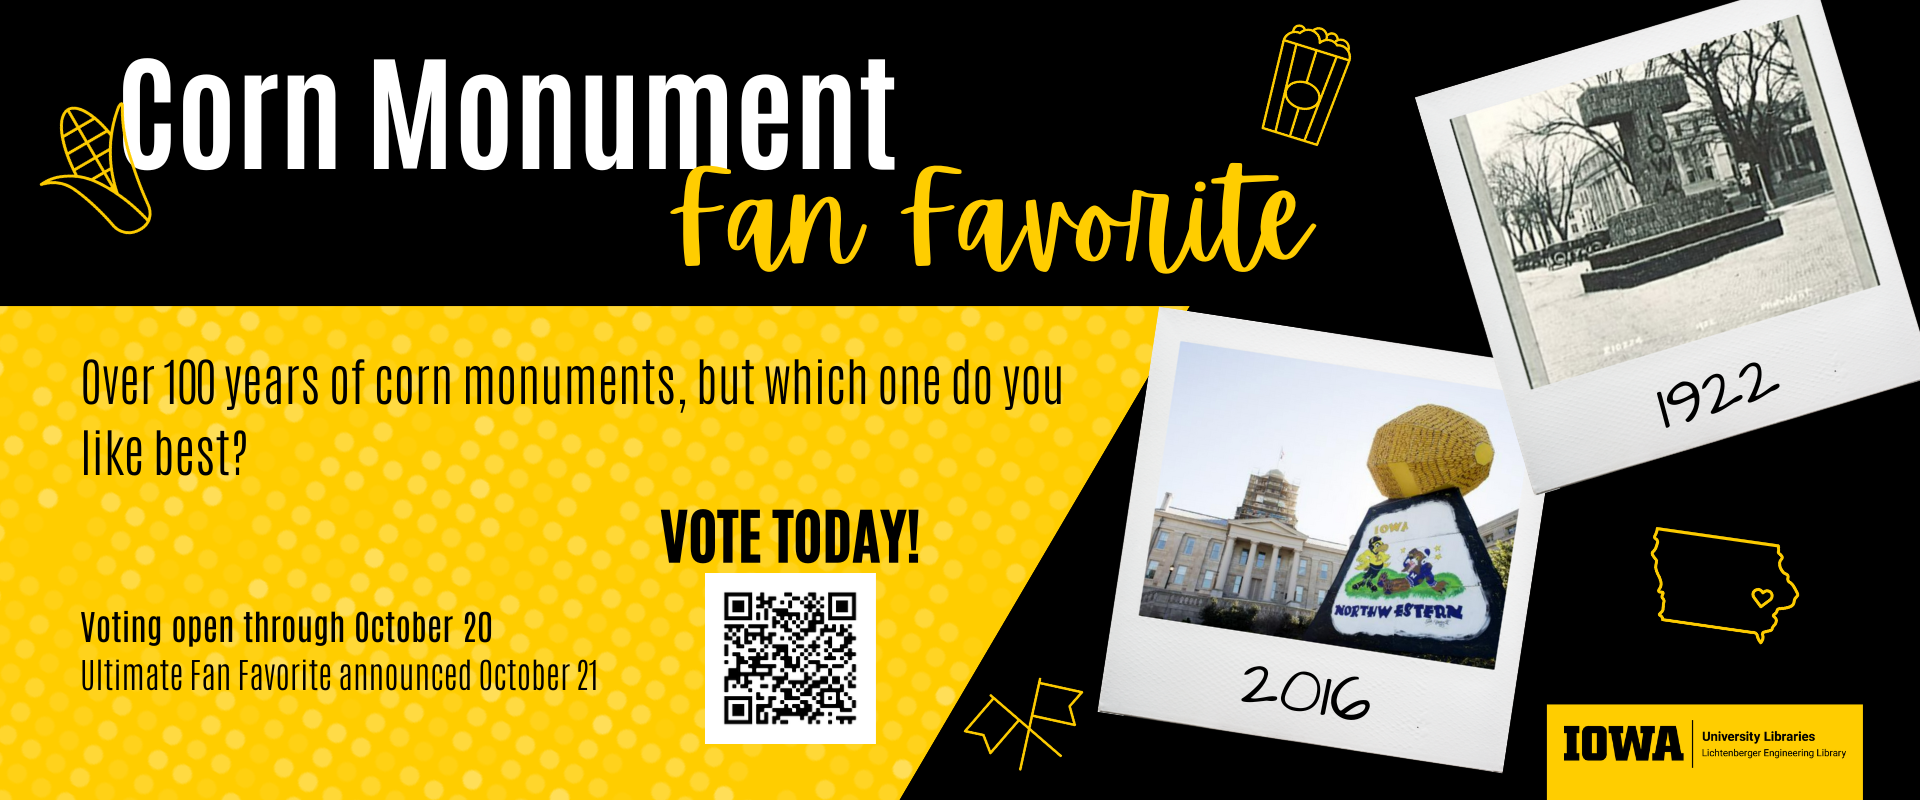 corn_monument_voting_kiosk.png